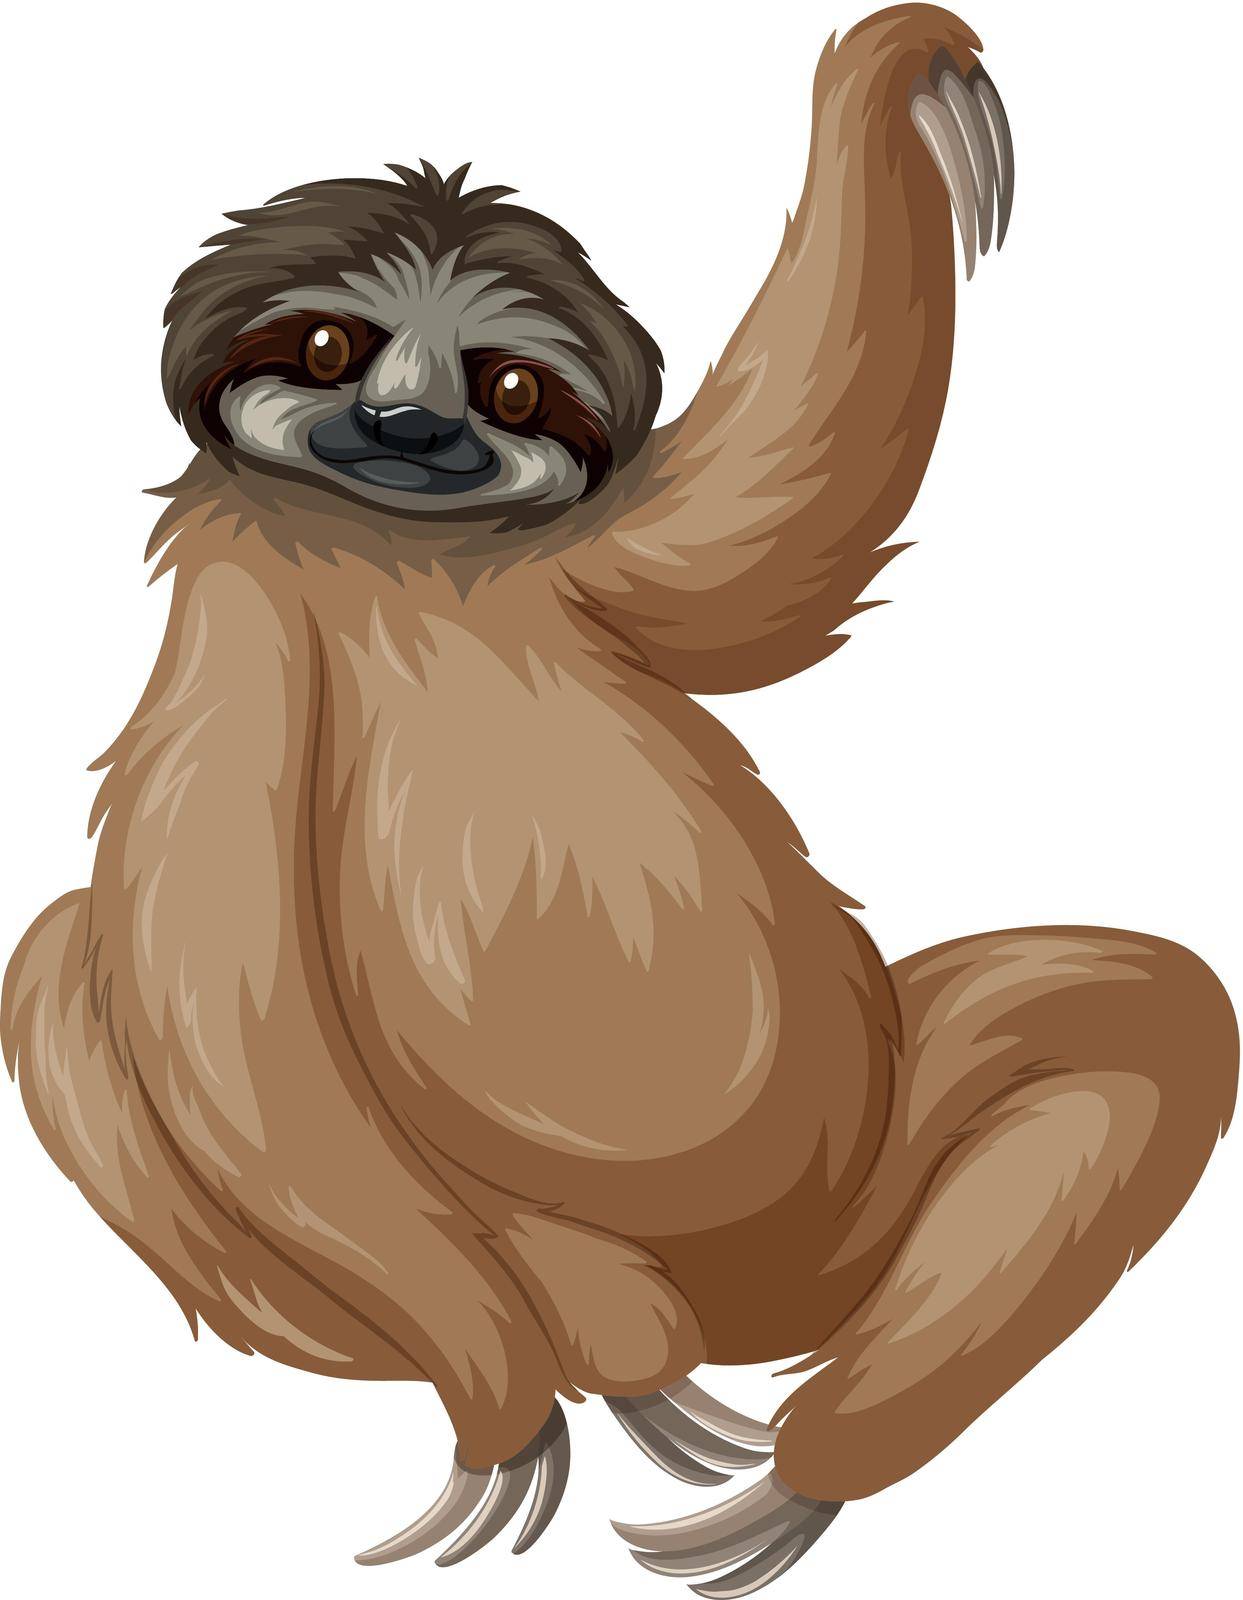 Sloth lifting one arm up illustration